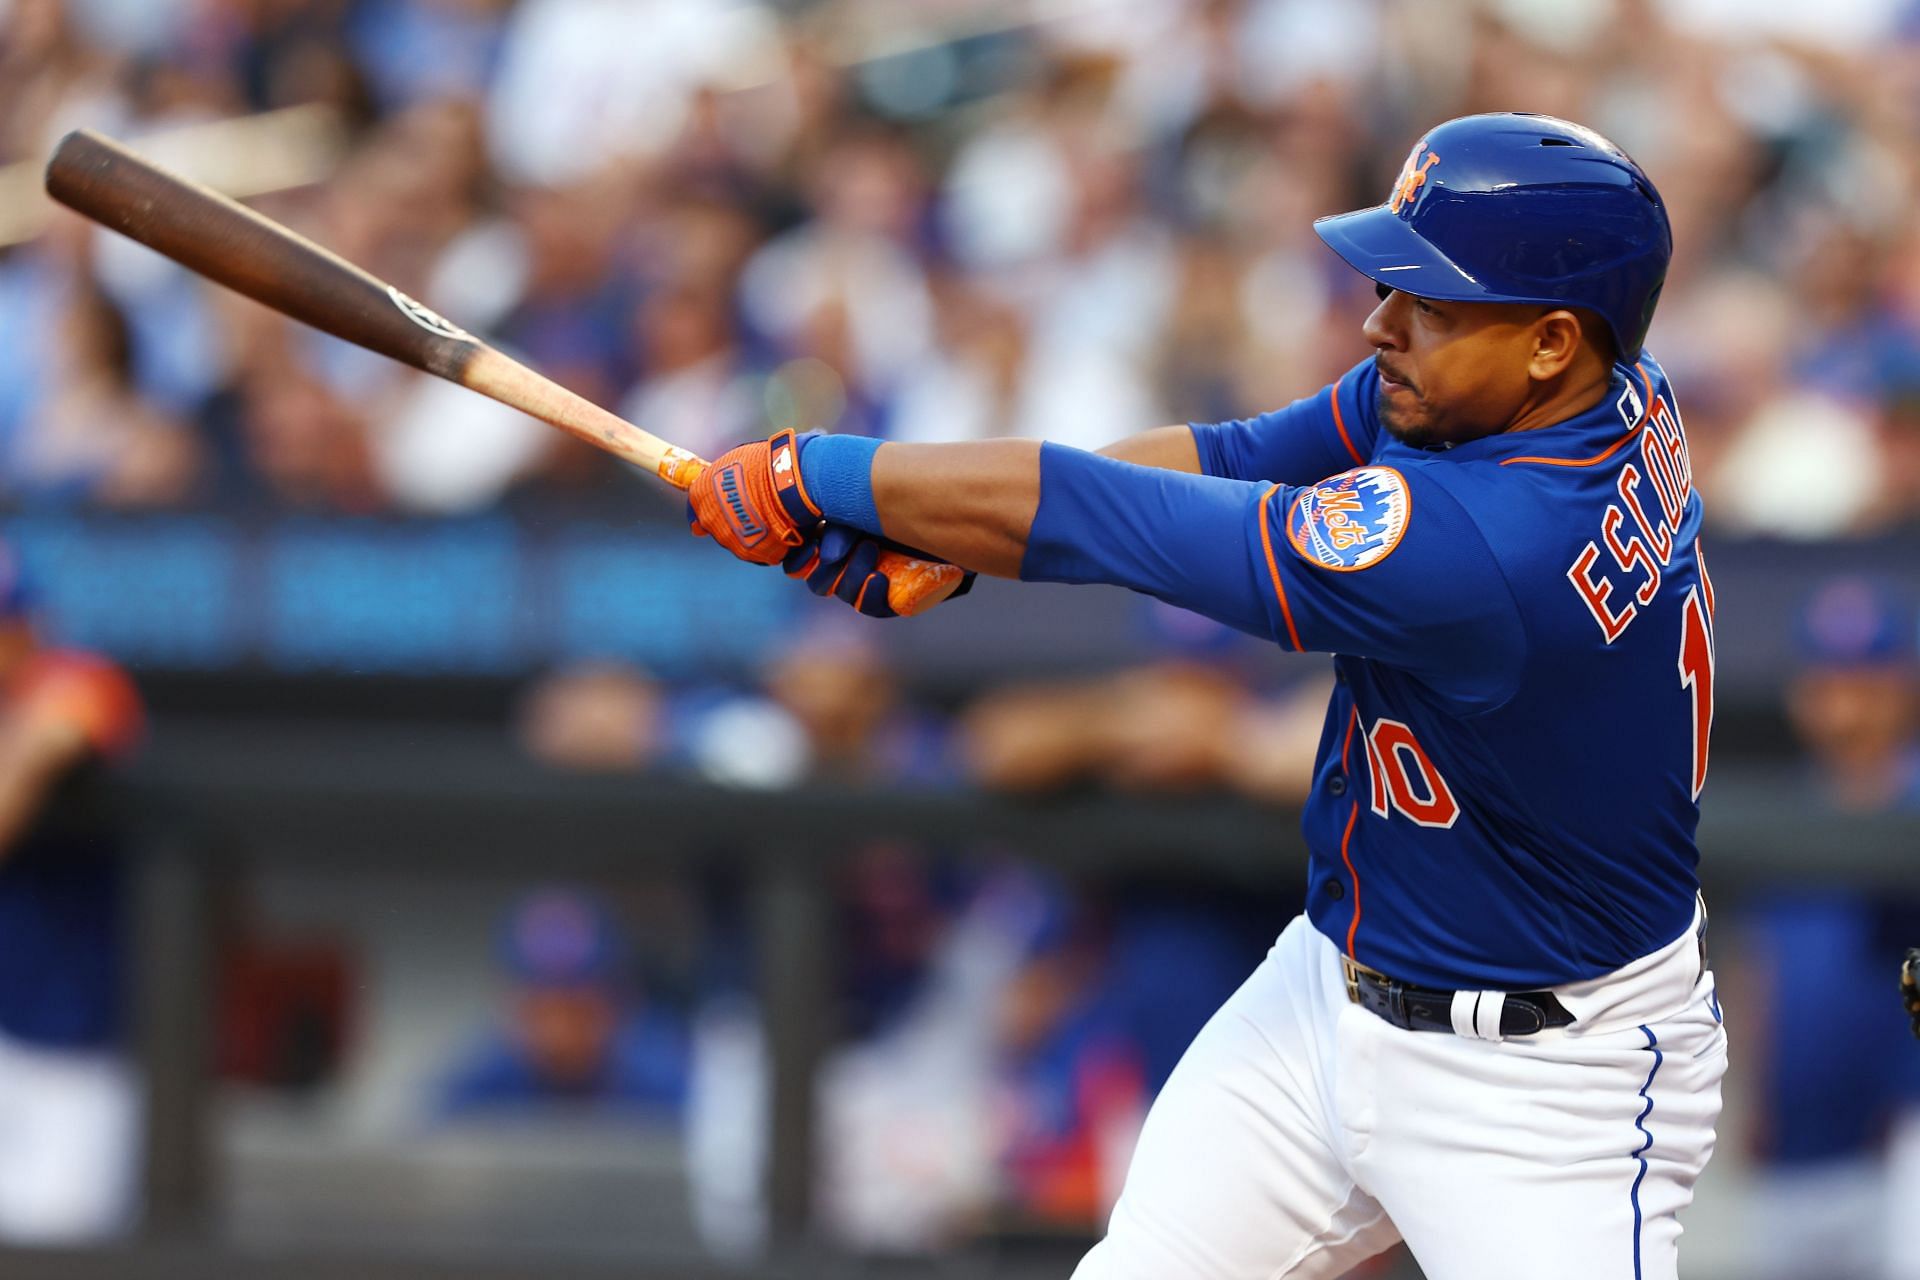 New York Mets infielder Eduardo Escobar is batting .231 on the season with six home runs and 29 RBIs.